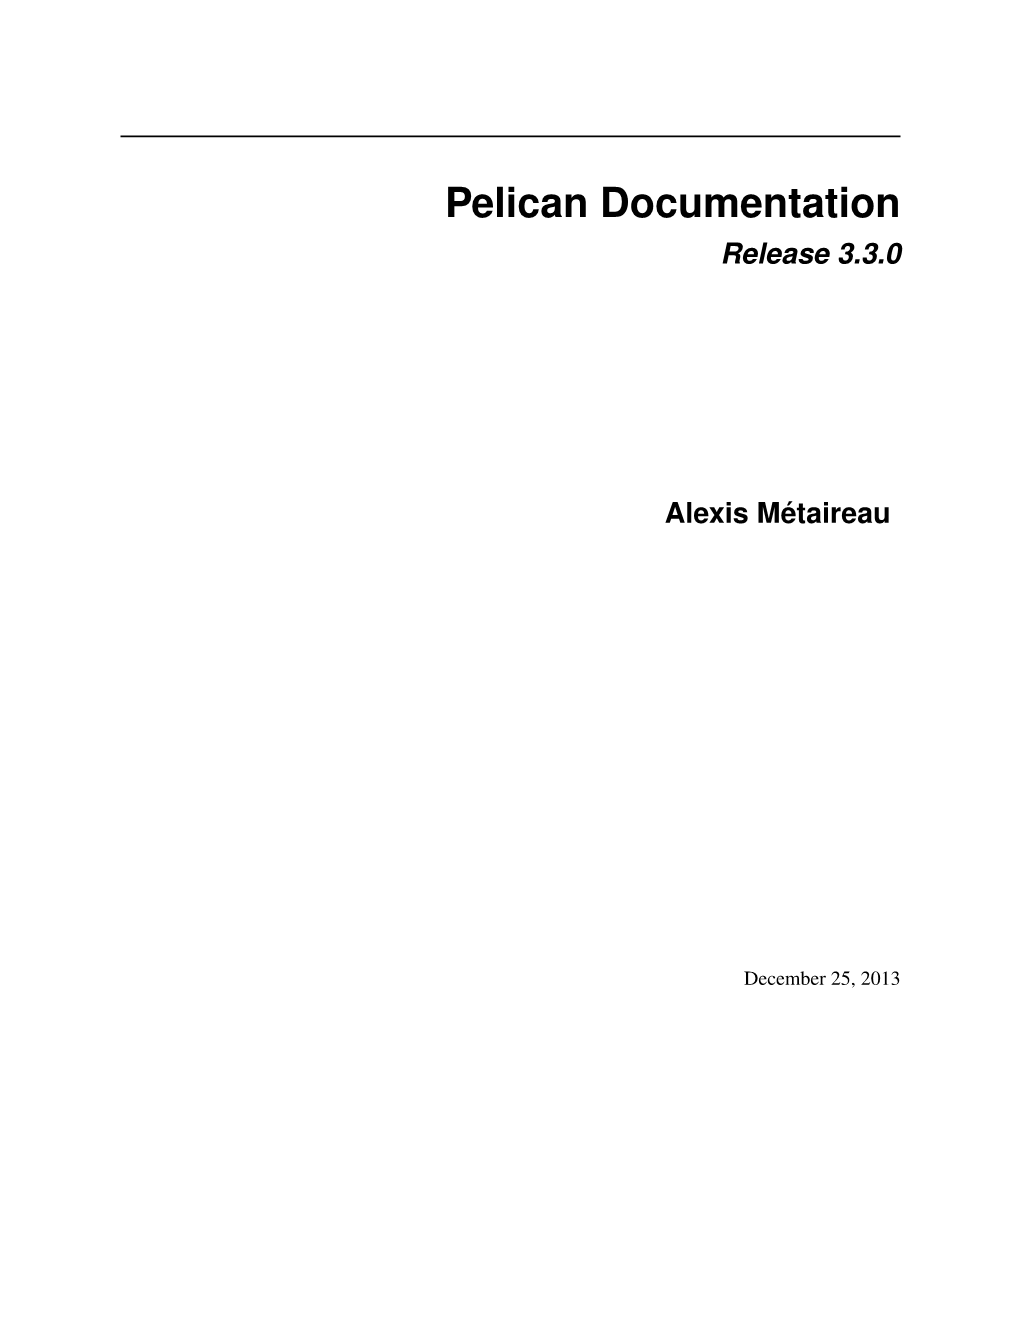 Pelican Documentation Release 3.3.0 Alexis Métaireau